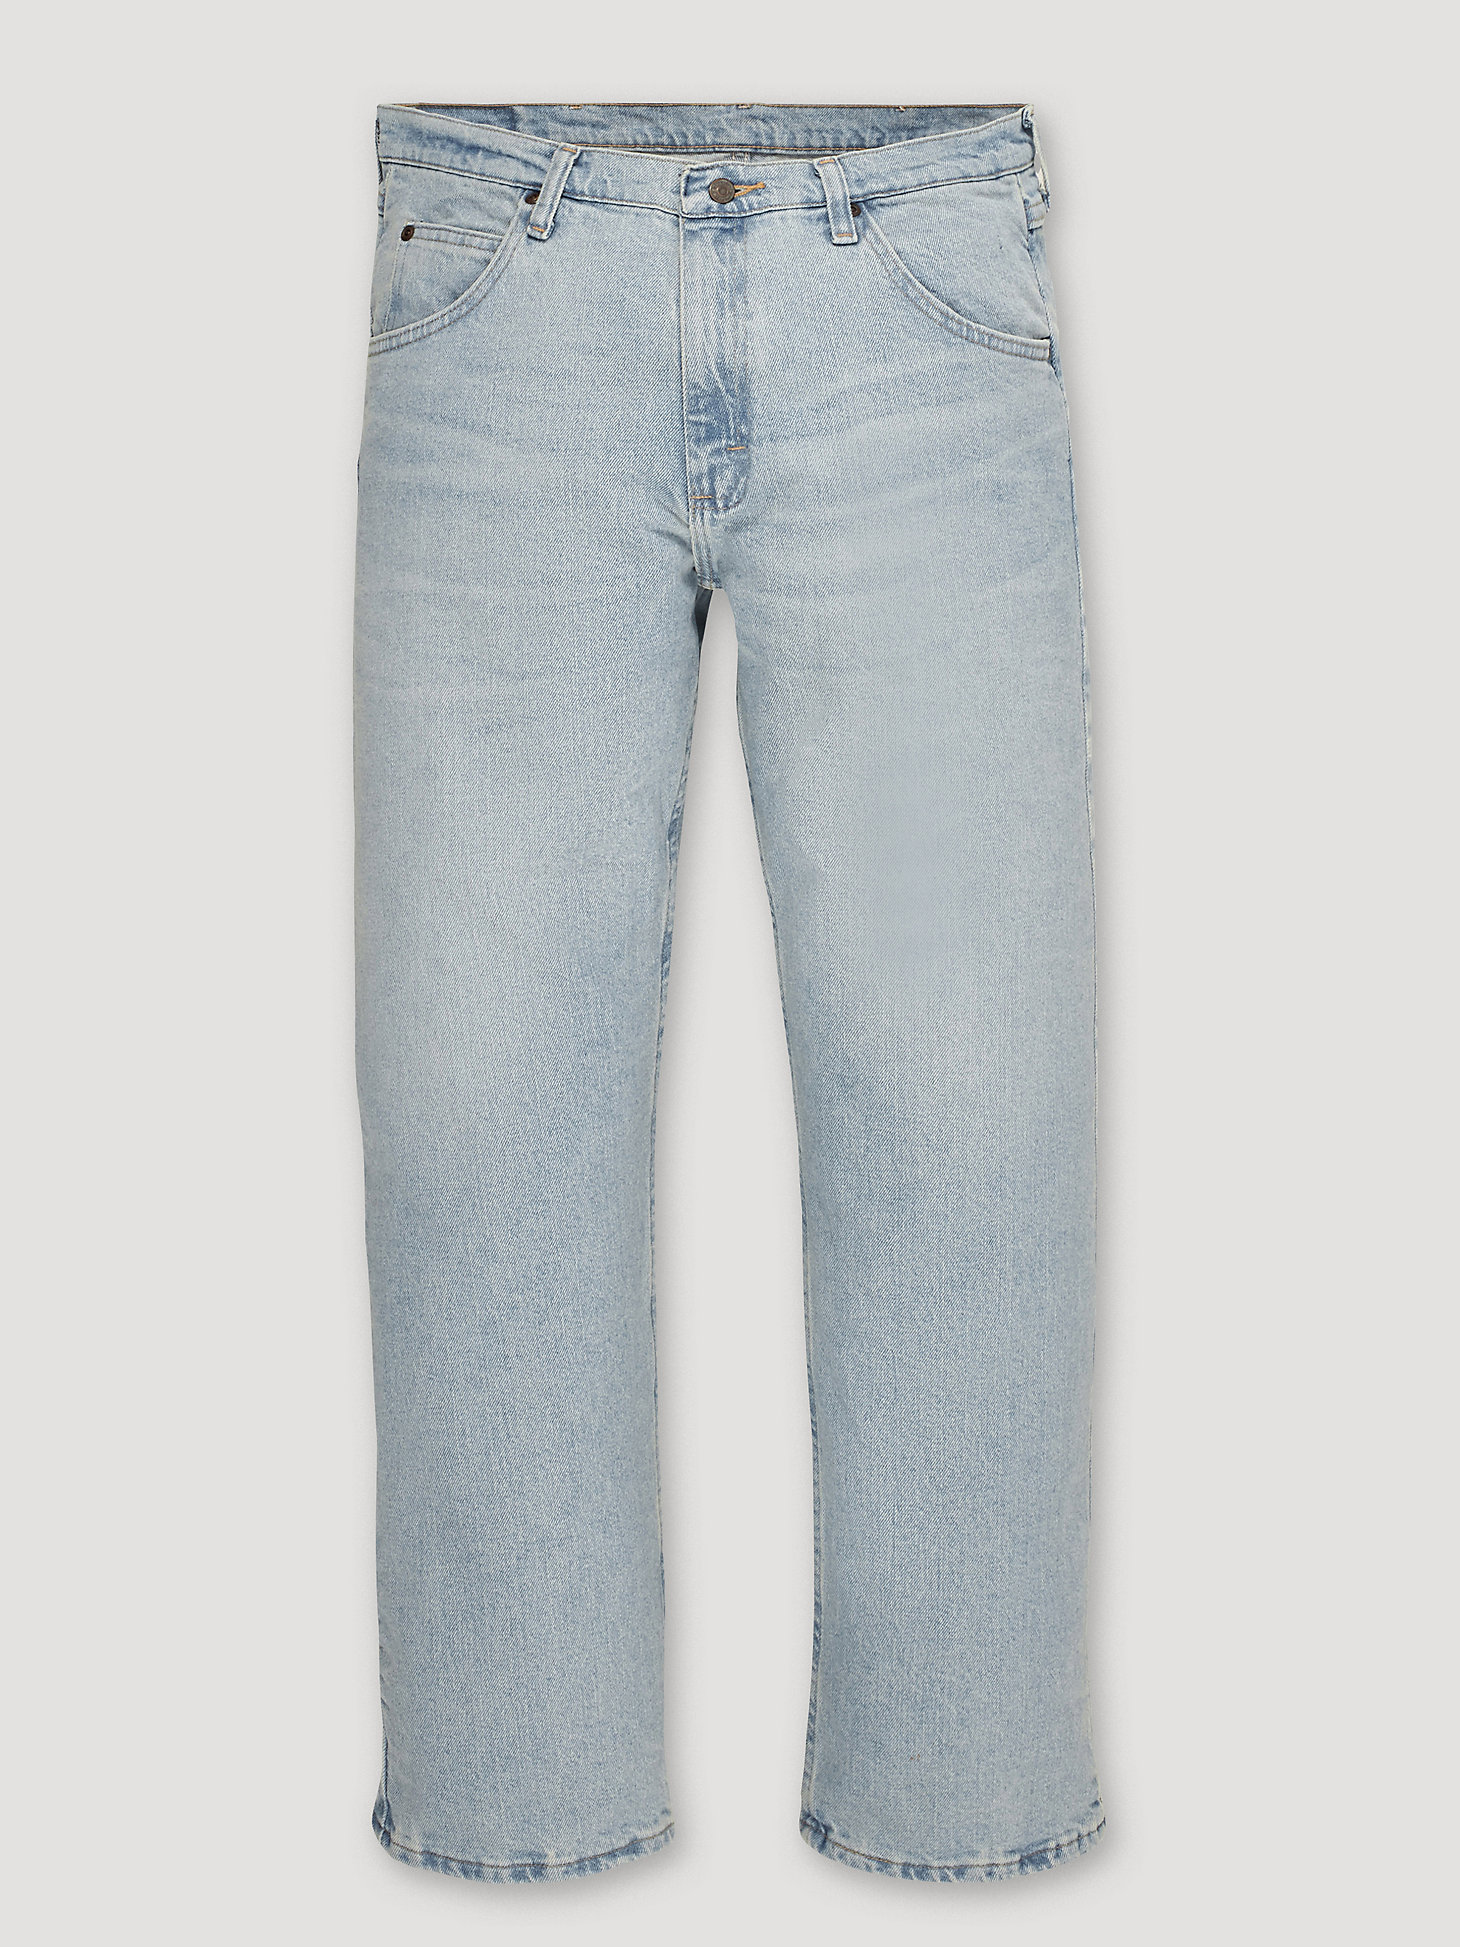 Wrangler® Five Star Premium Denim Flex for Comfort Relaxed Fit Jean in Vintage Blue alternative view 5